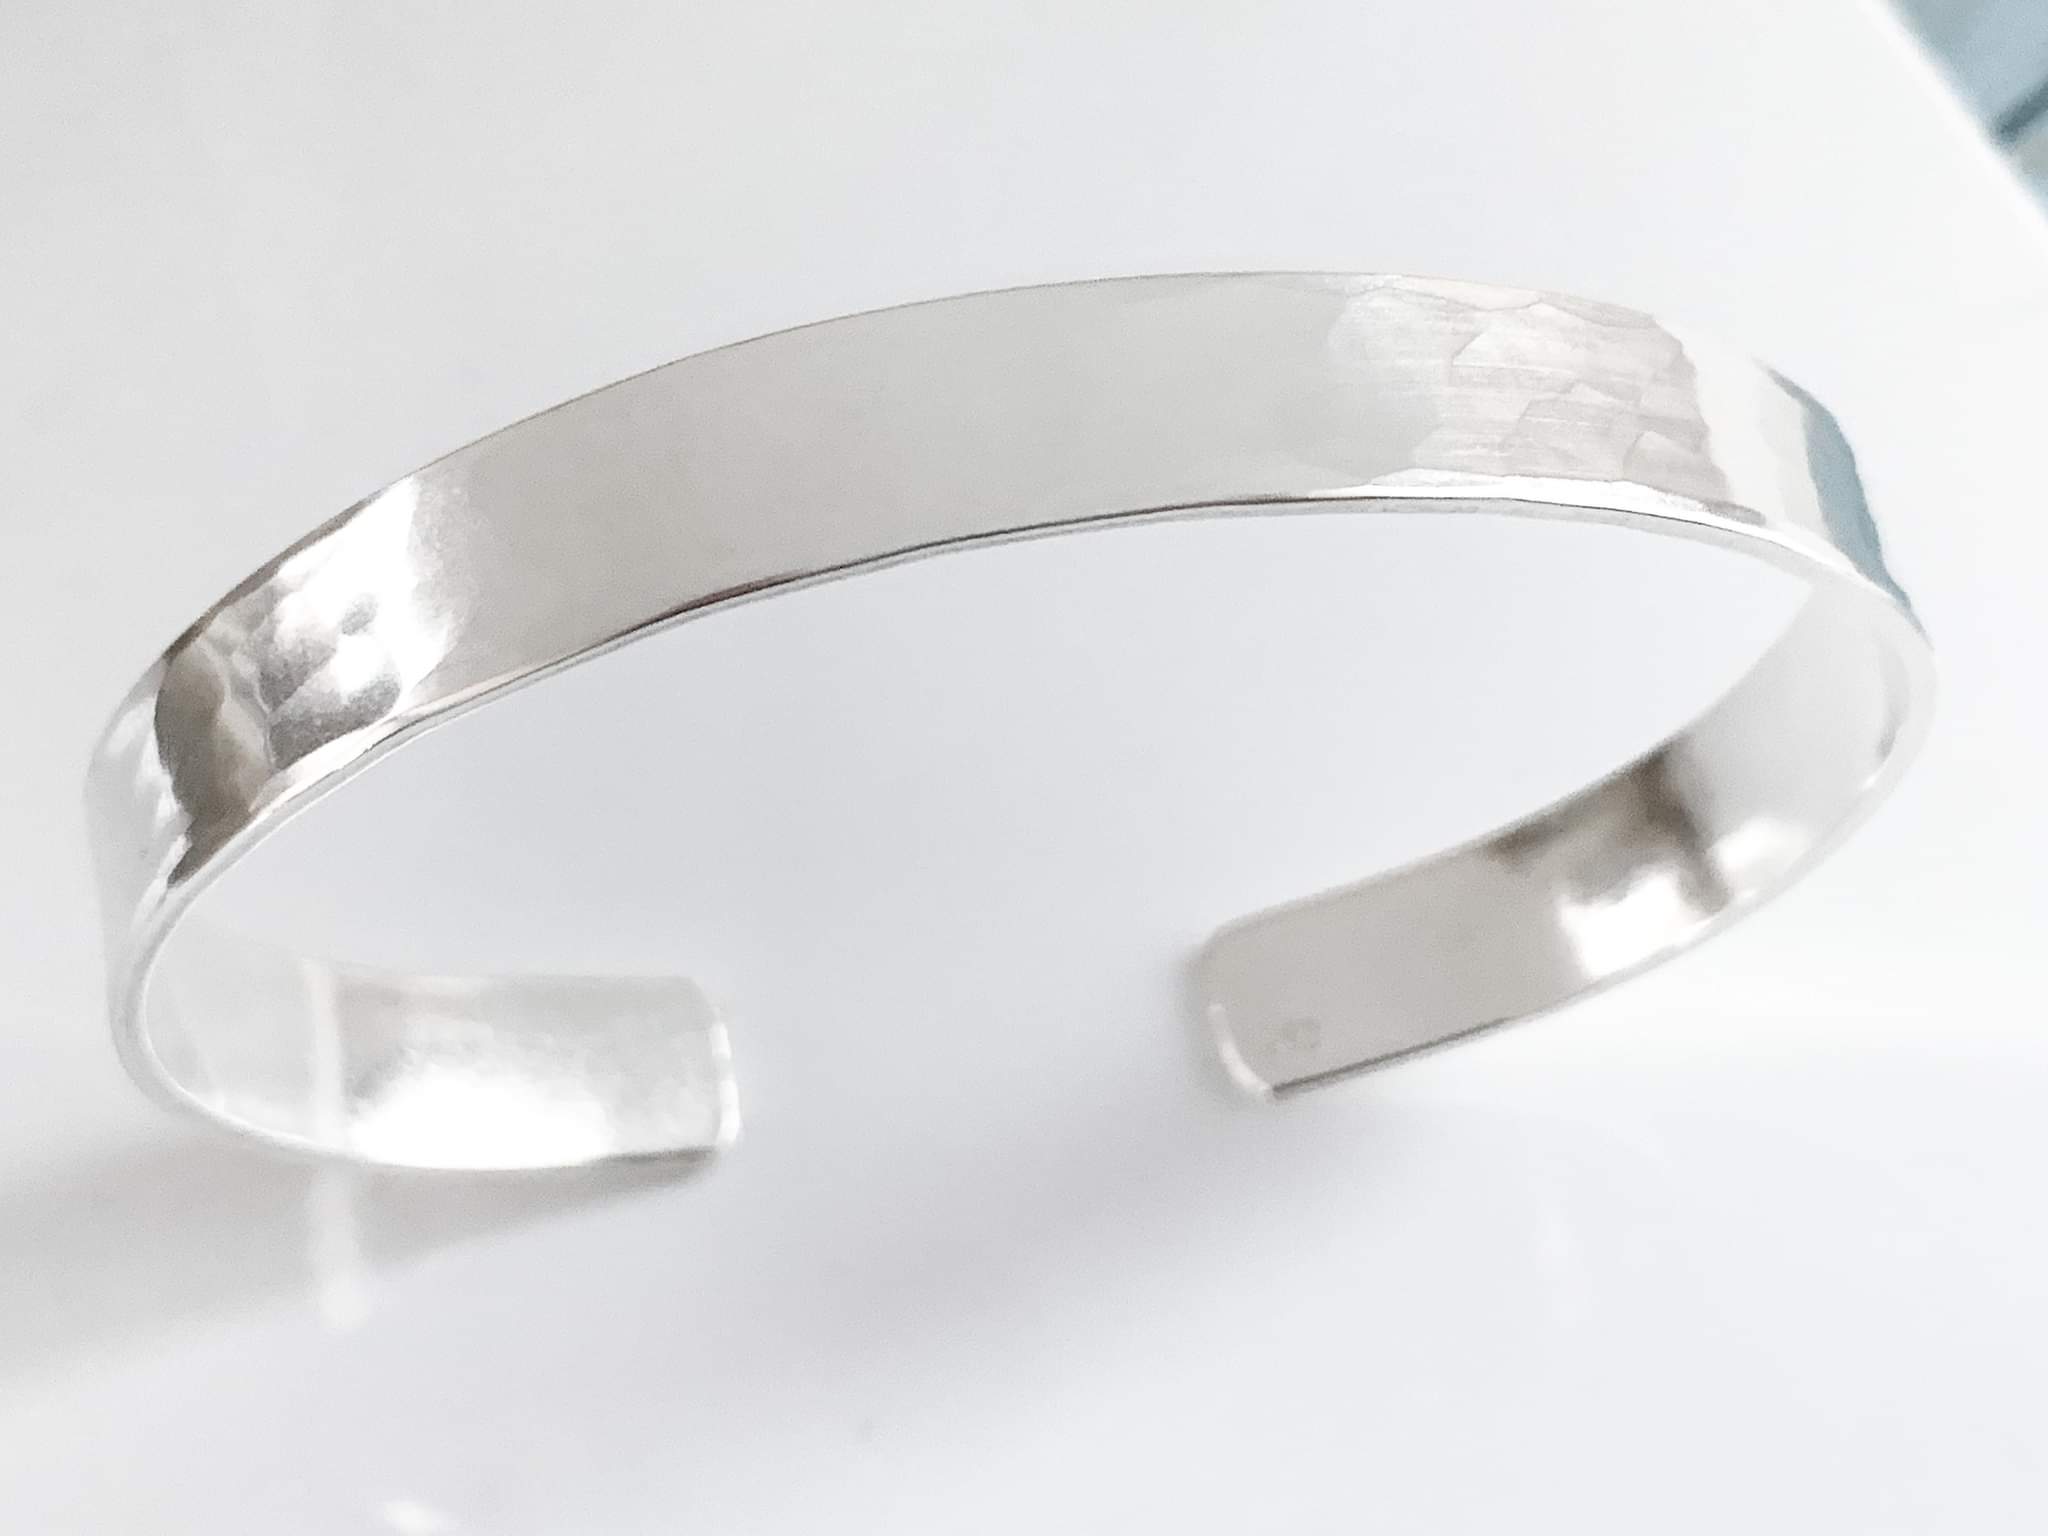 Statement Hammered Cuff Bracelet in Sterling Silver